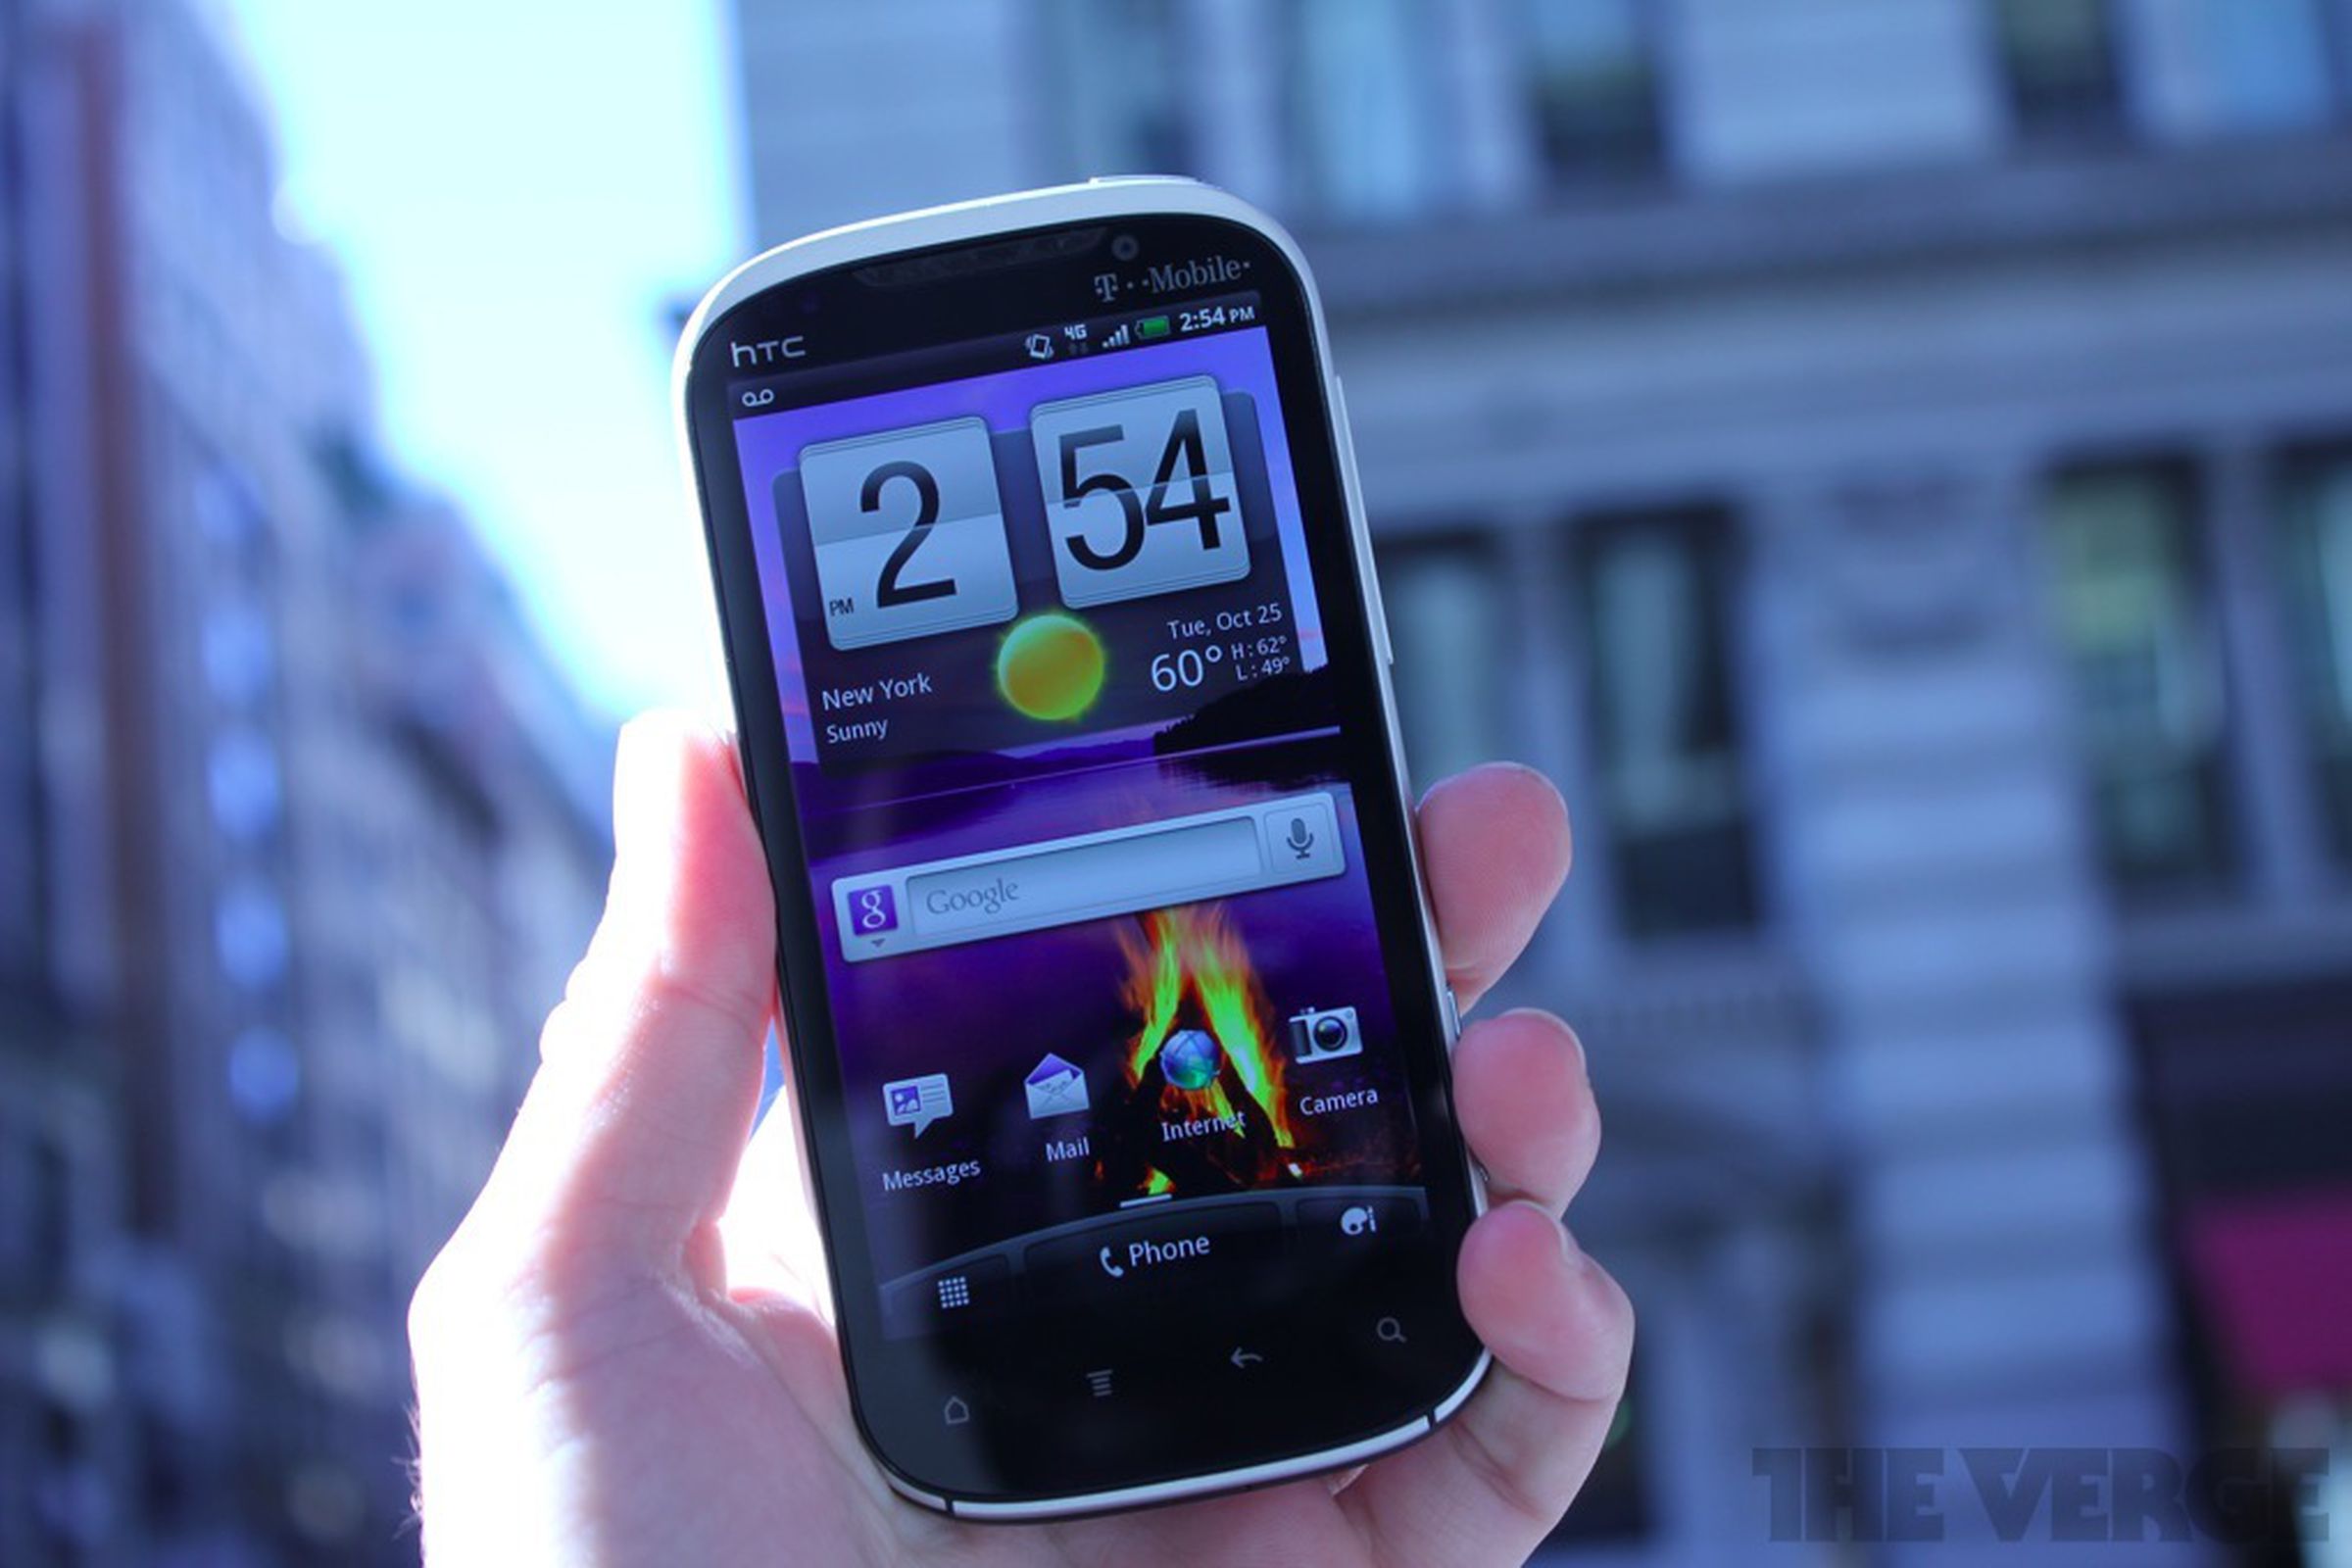 HTC Amaze 4G (Hero)